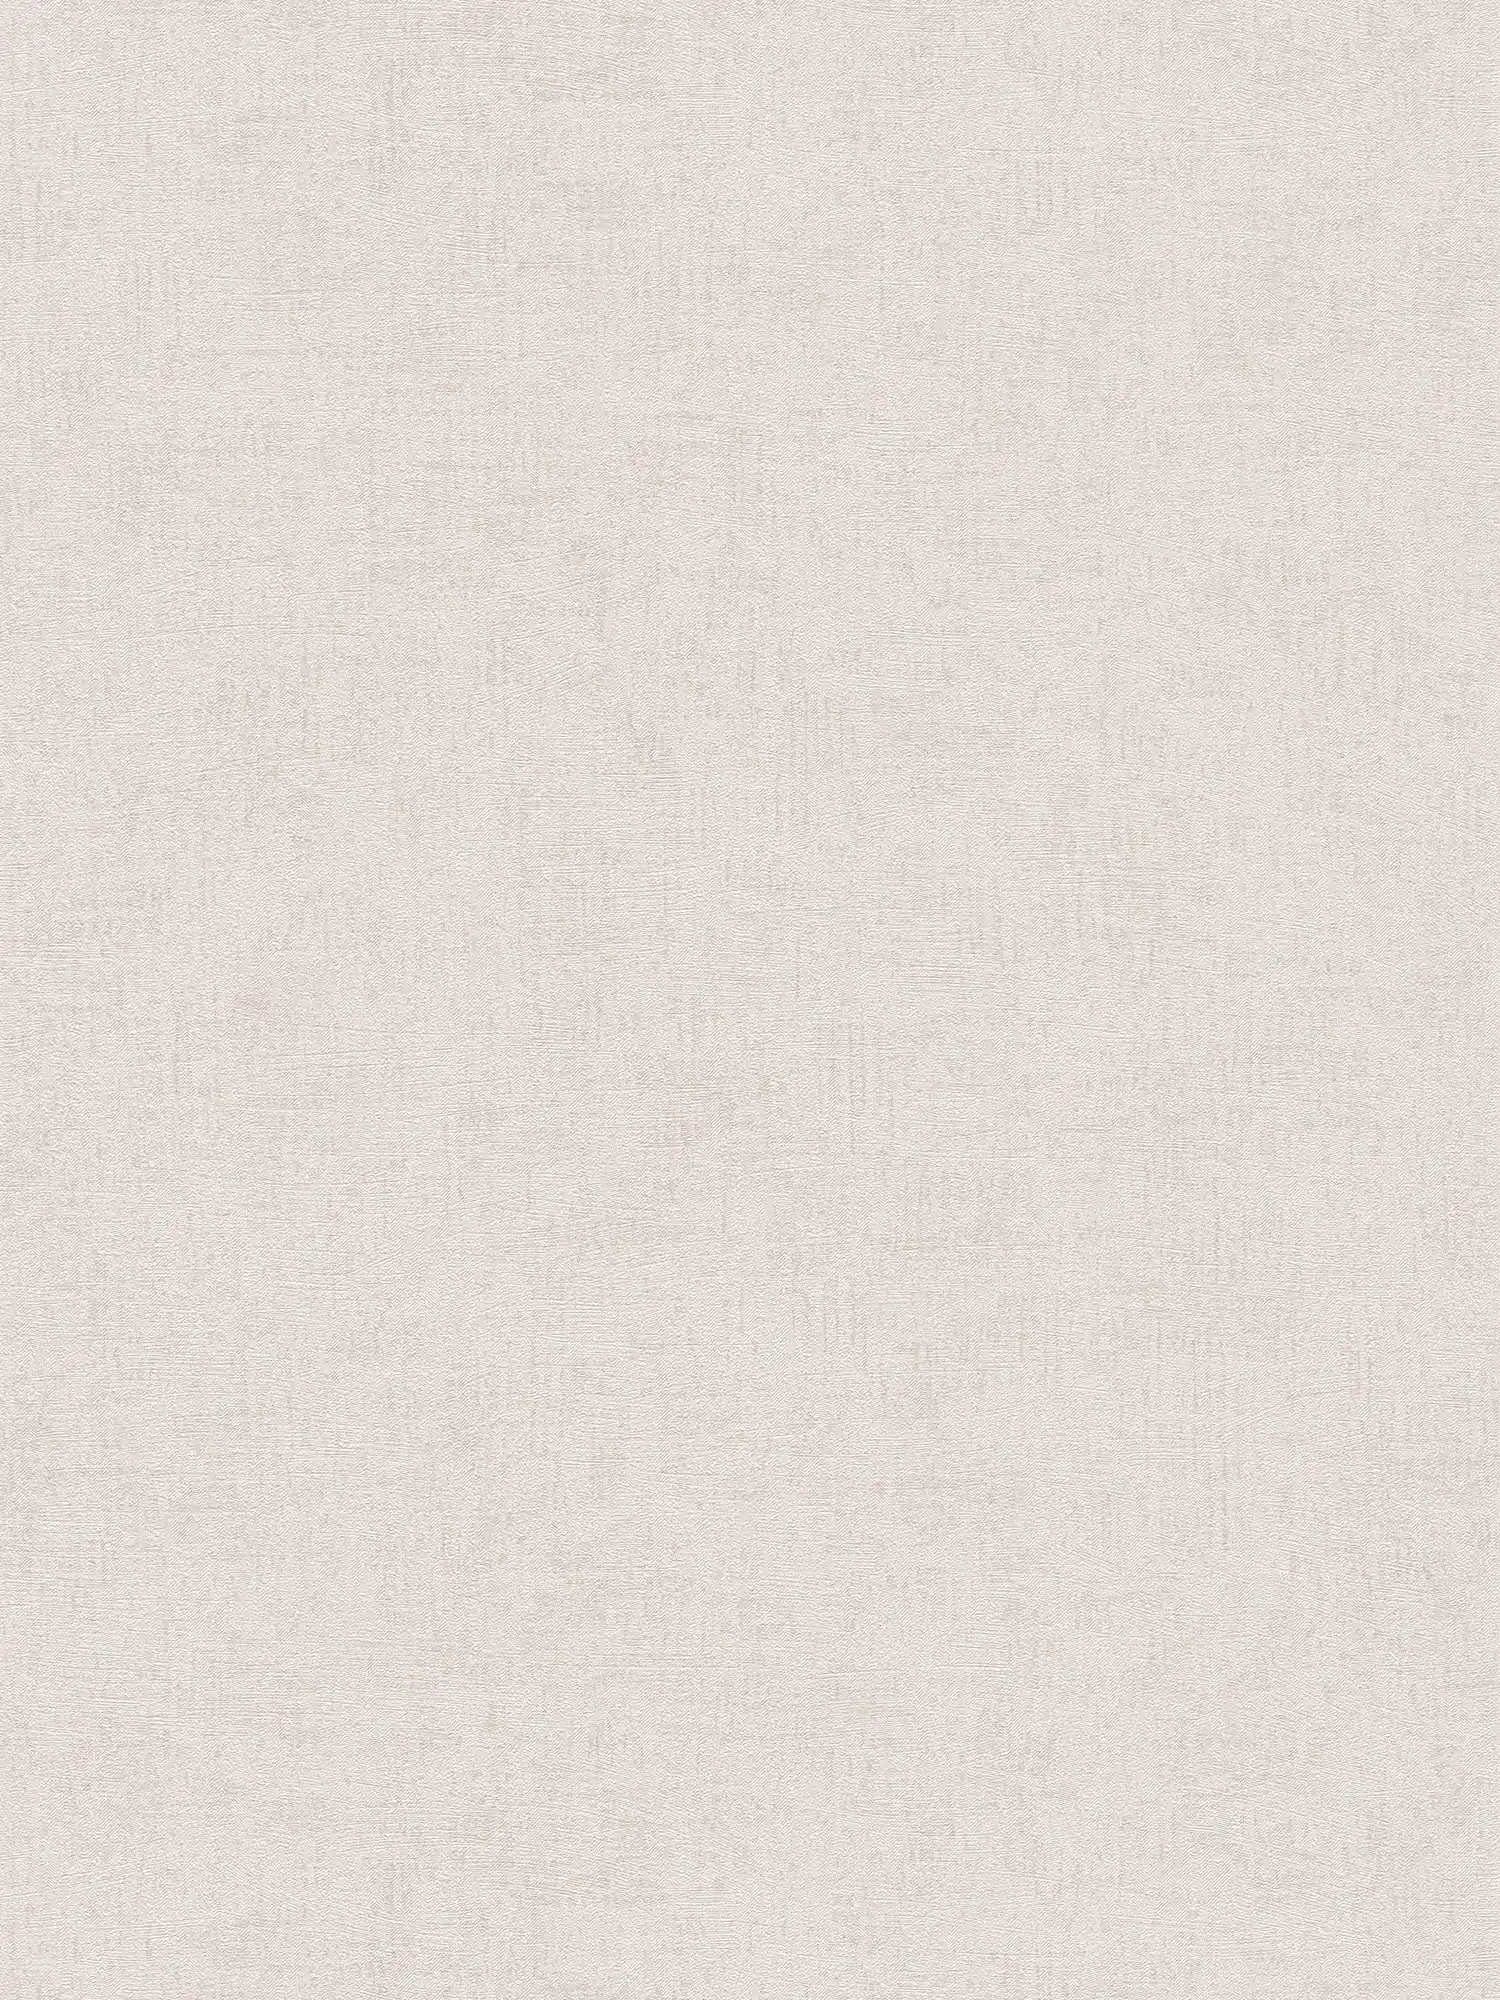 Non-woven wallpaper plain beige with glitter effect - beige, cream, metallic
